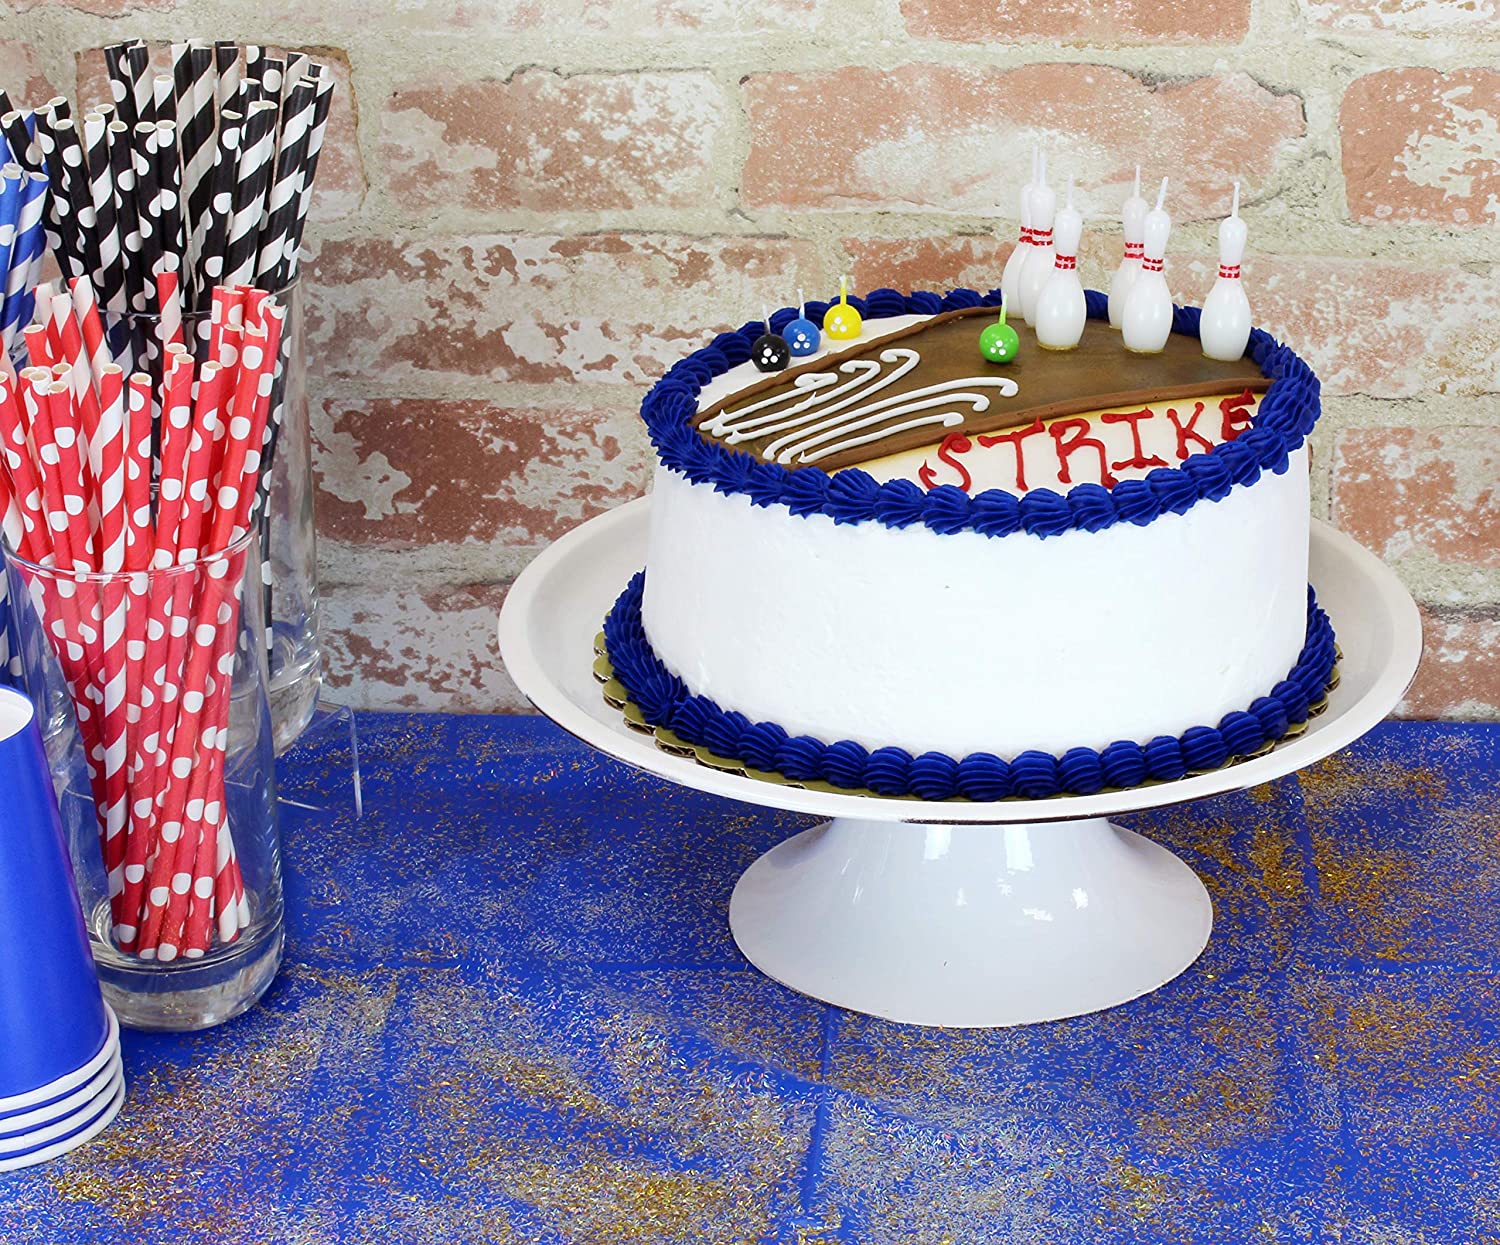 Bowling Cake Candle Set (20-Piece Pins and Balls Birthday Candle Set) - sh1702cb0Bwlg